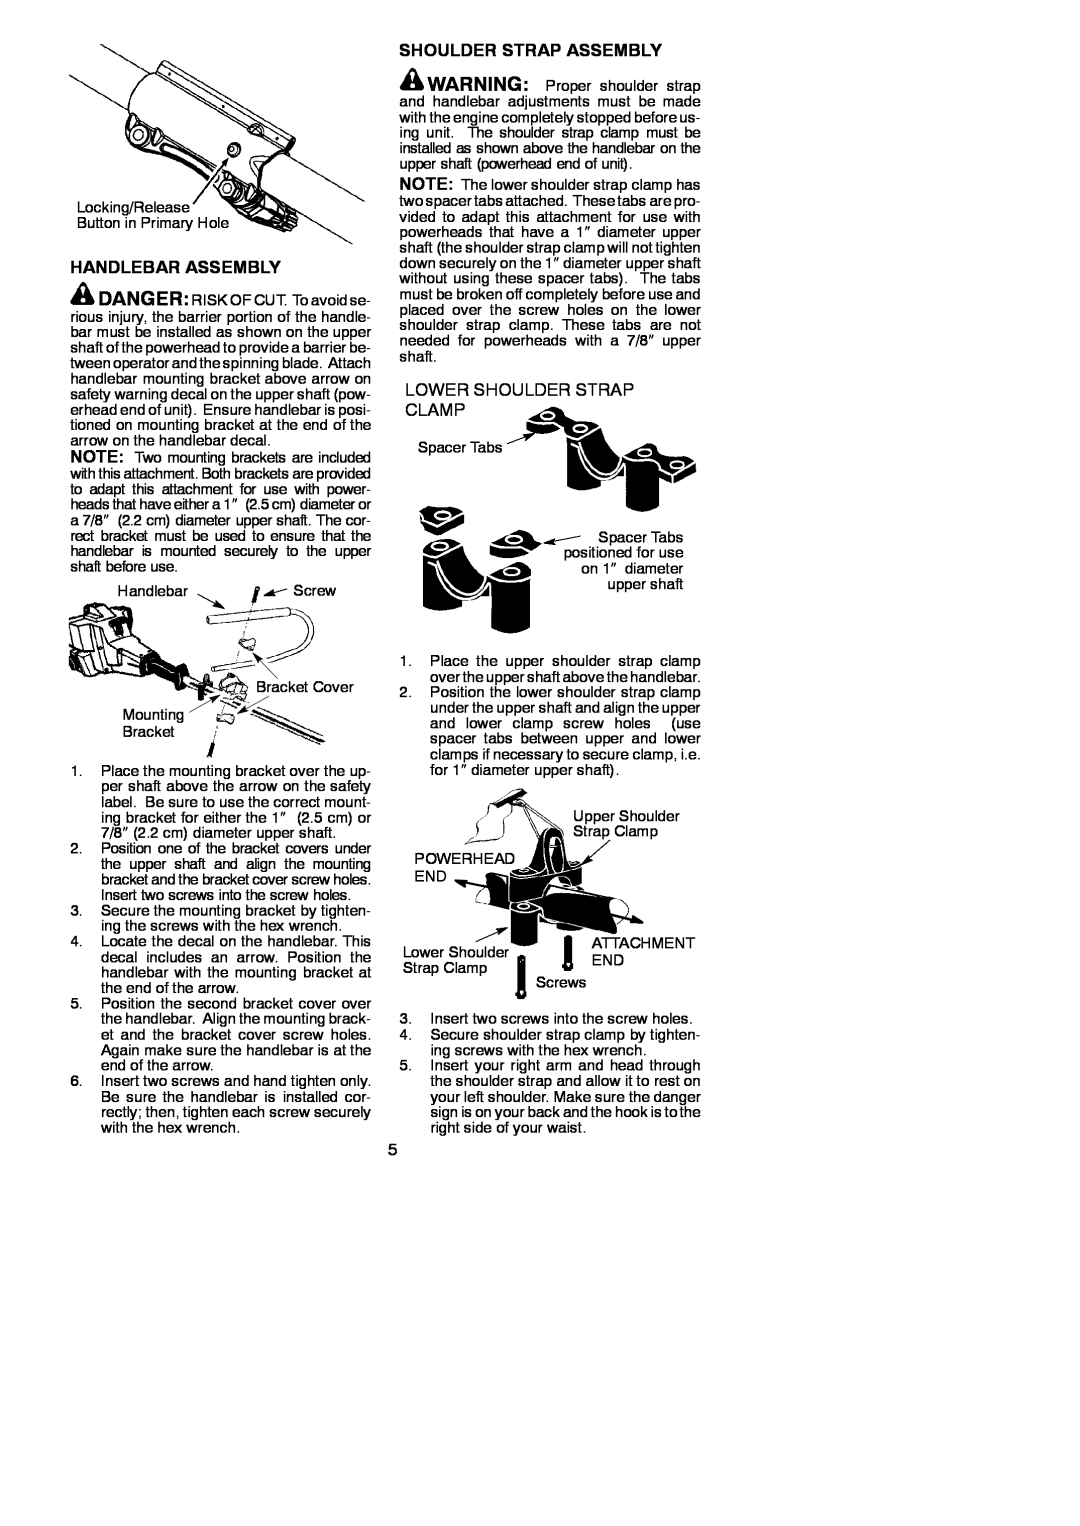 Poulan 545212831, 952711610 instruction manual Handlebar Assembly, Shoulder Strap Assembly, Lower Shoulder Strap Clamp 